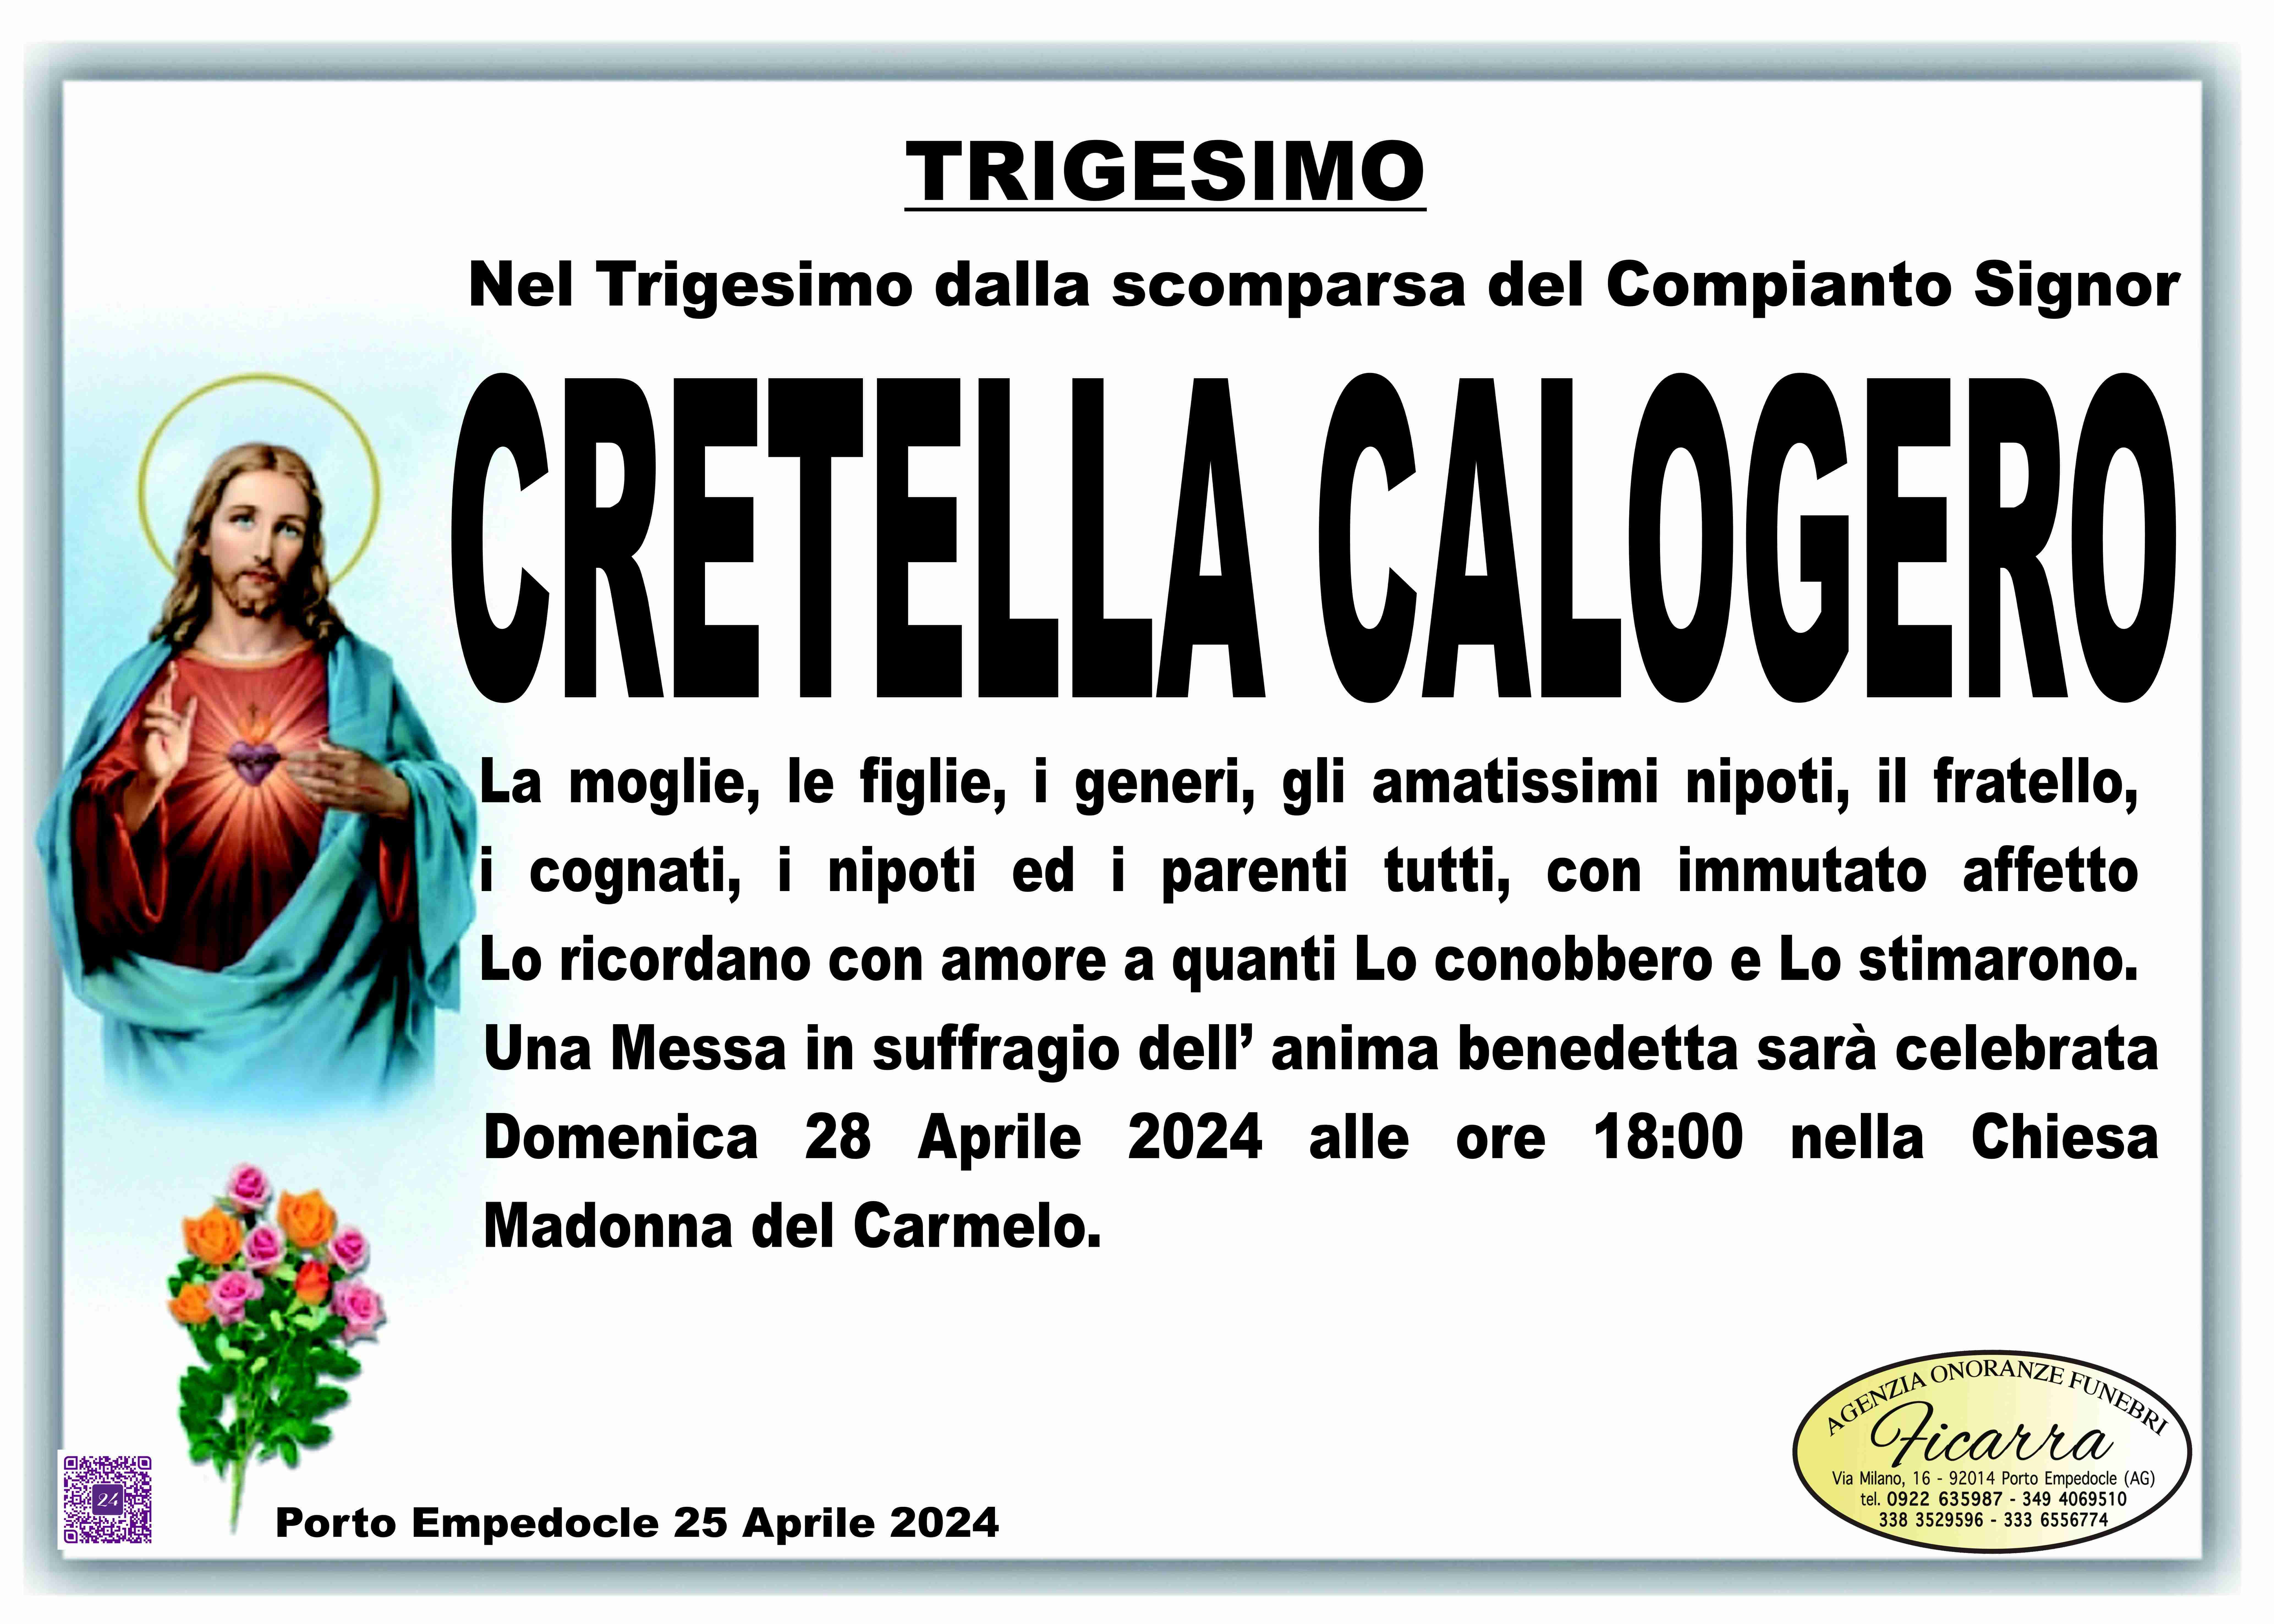 Calogero Cretella